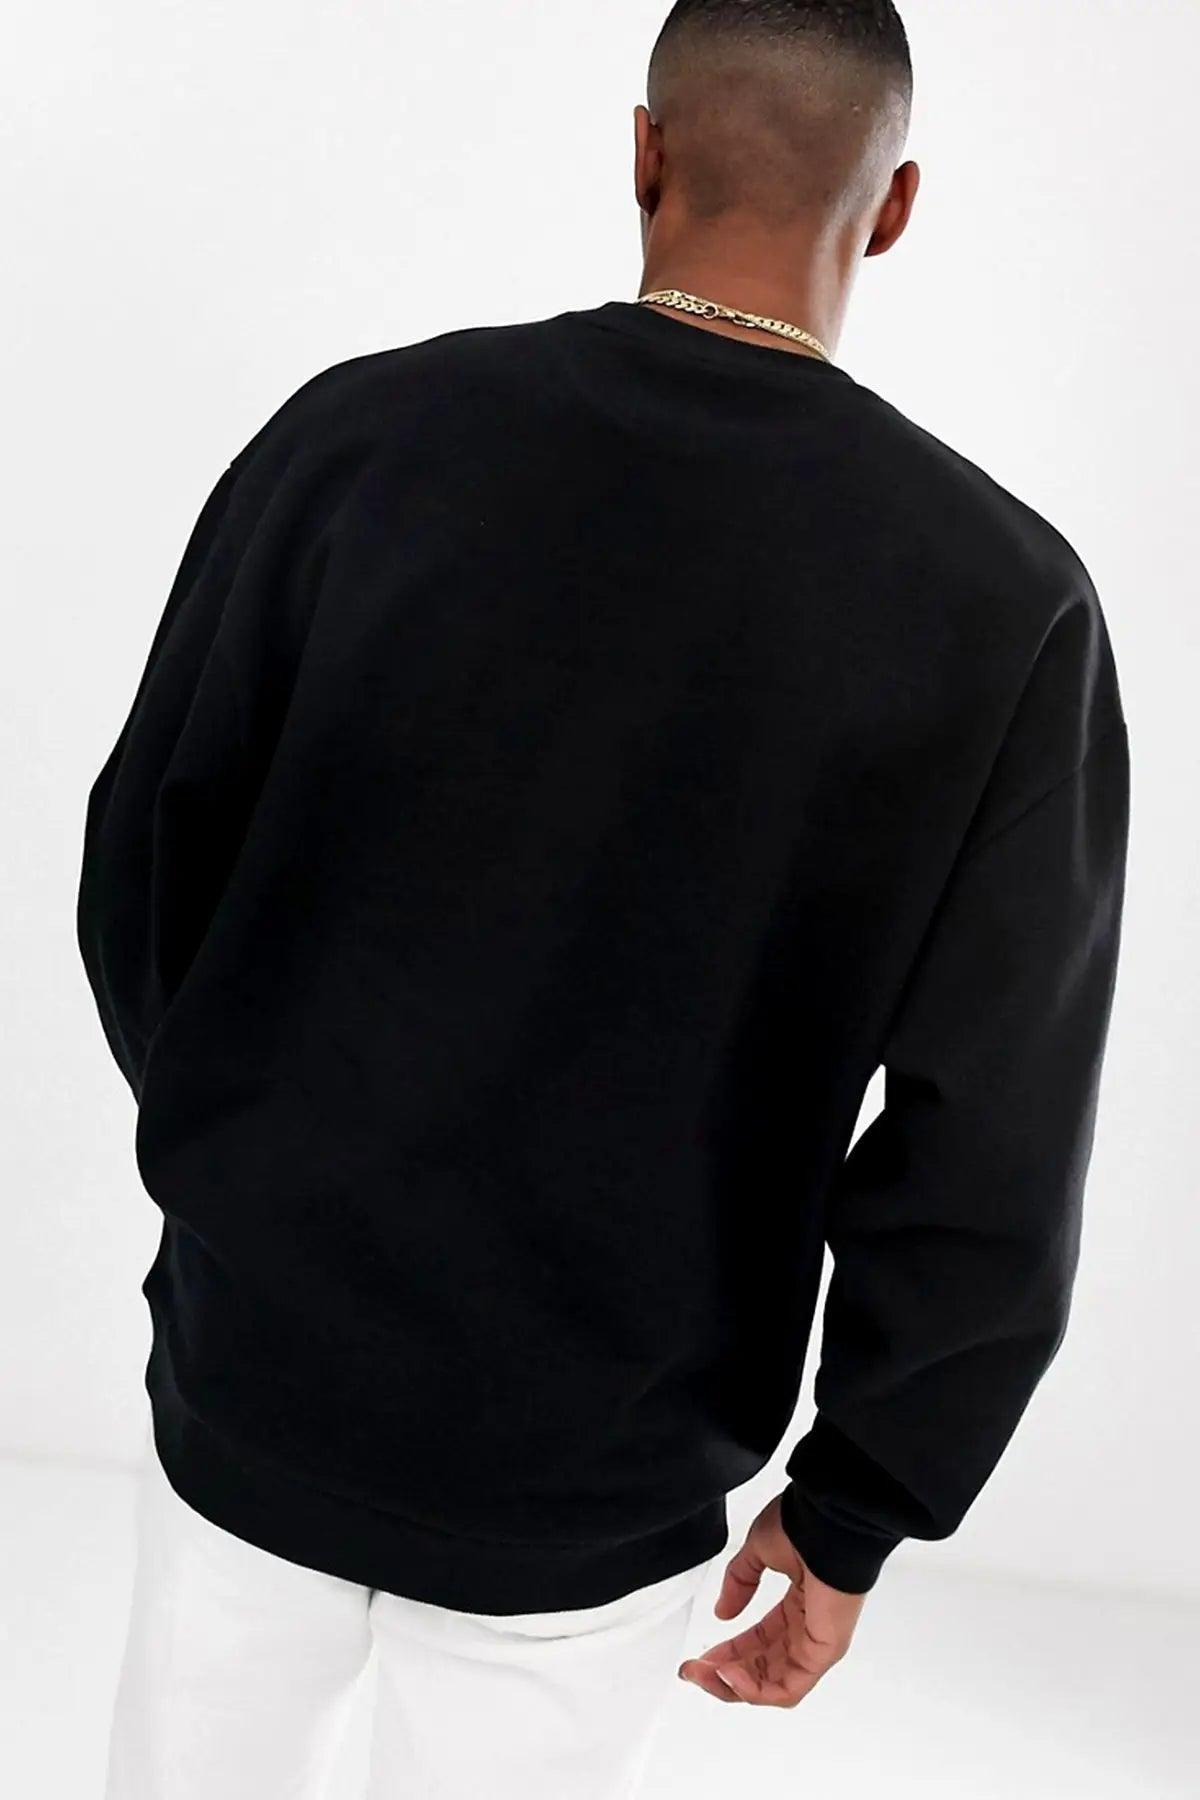 Never Give Up Oversize Erkek Sweatshirt - PΛSΛGE